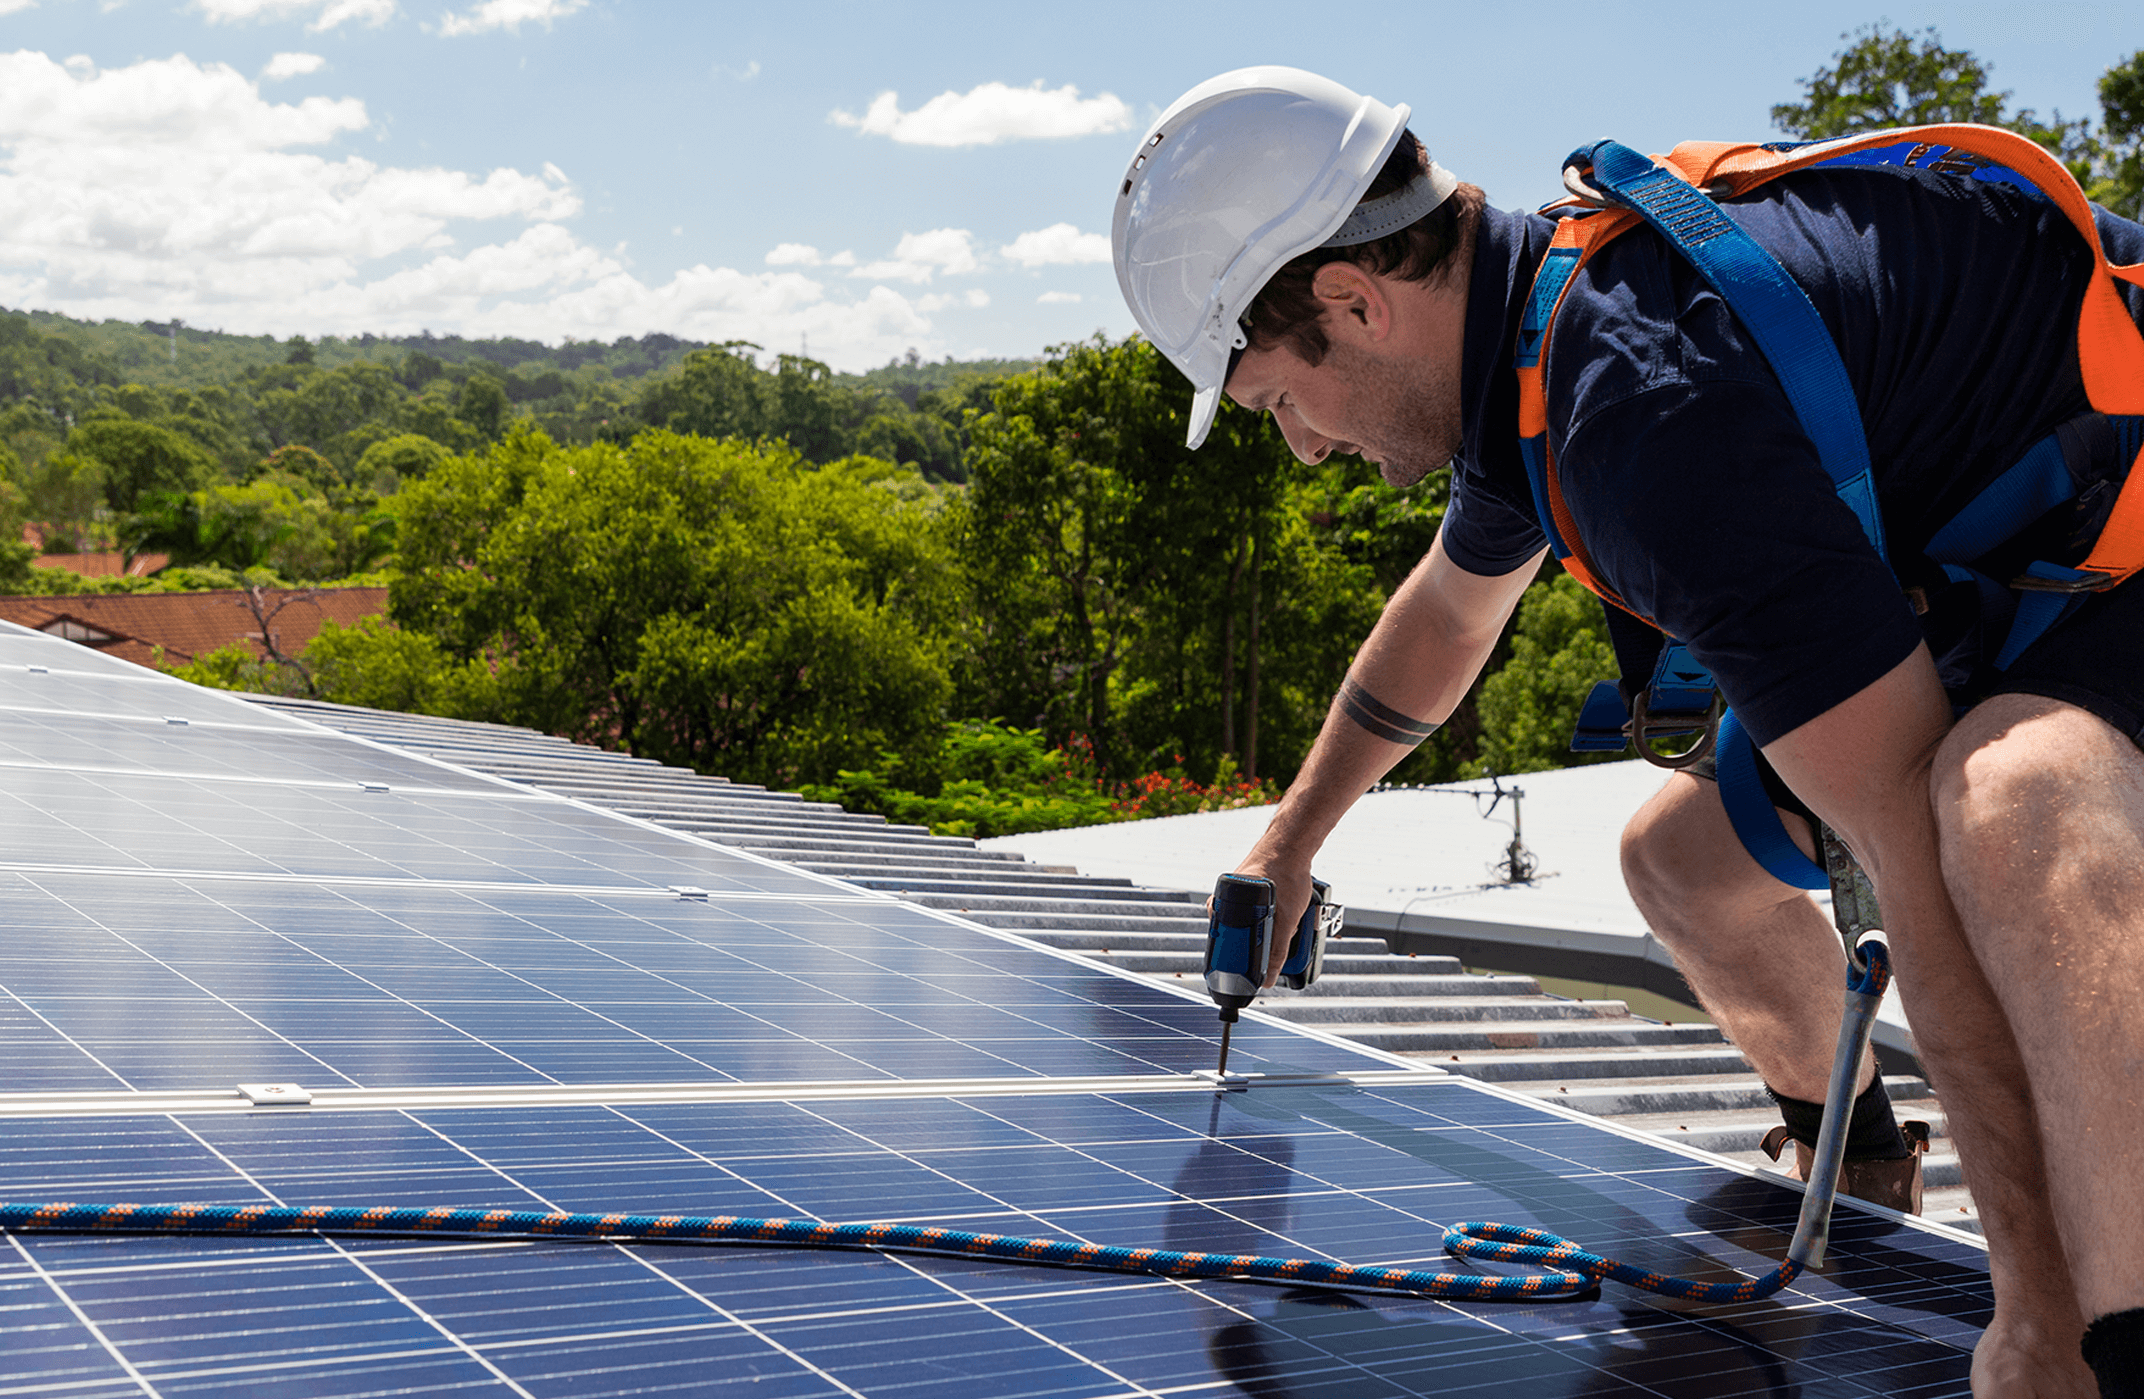 Man on roof installing solar panel